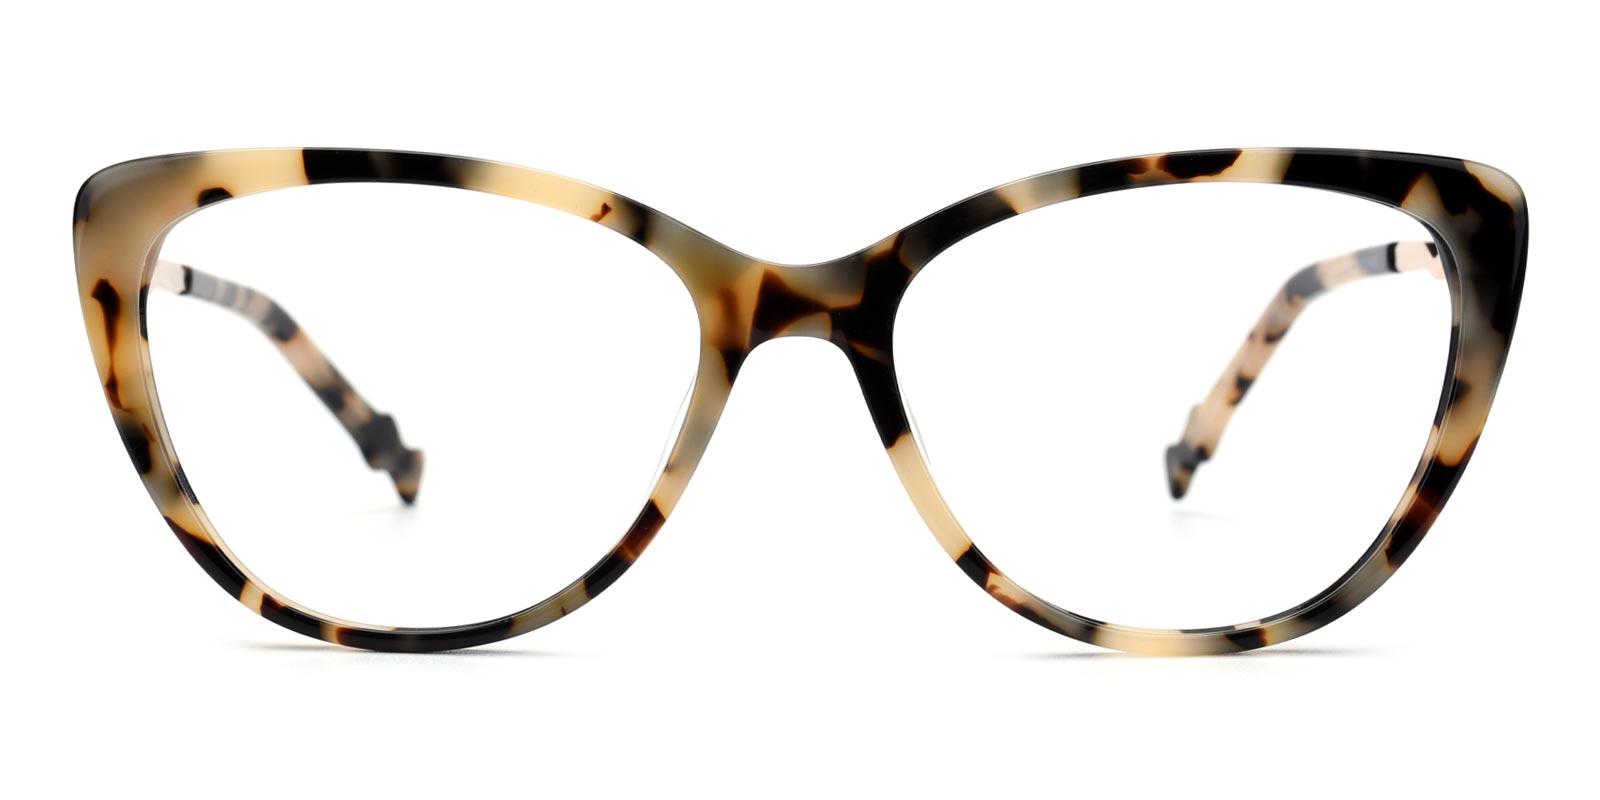 Winni Cat Eyeglasses in Tortoise - Sllac